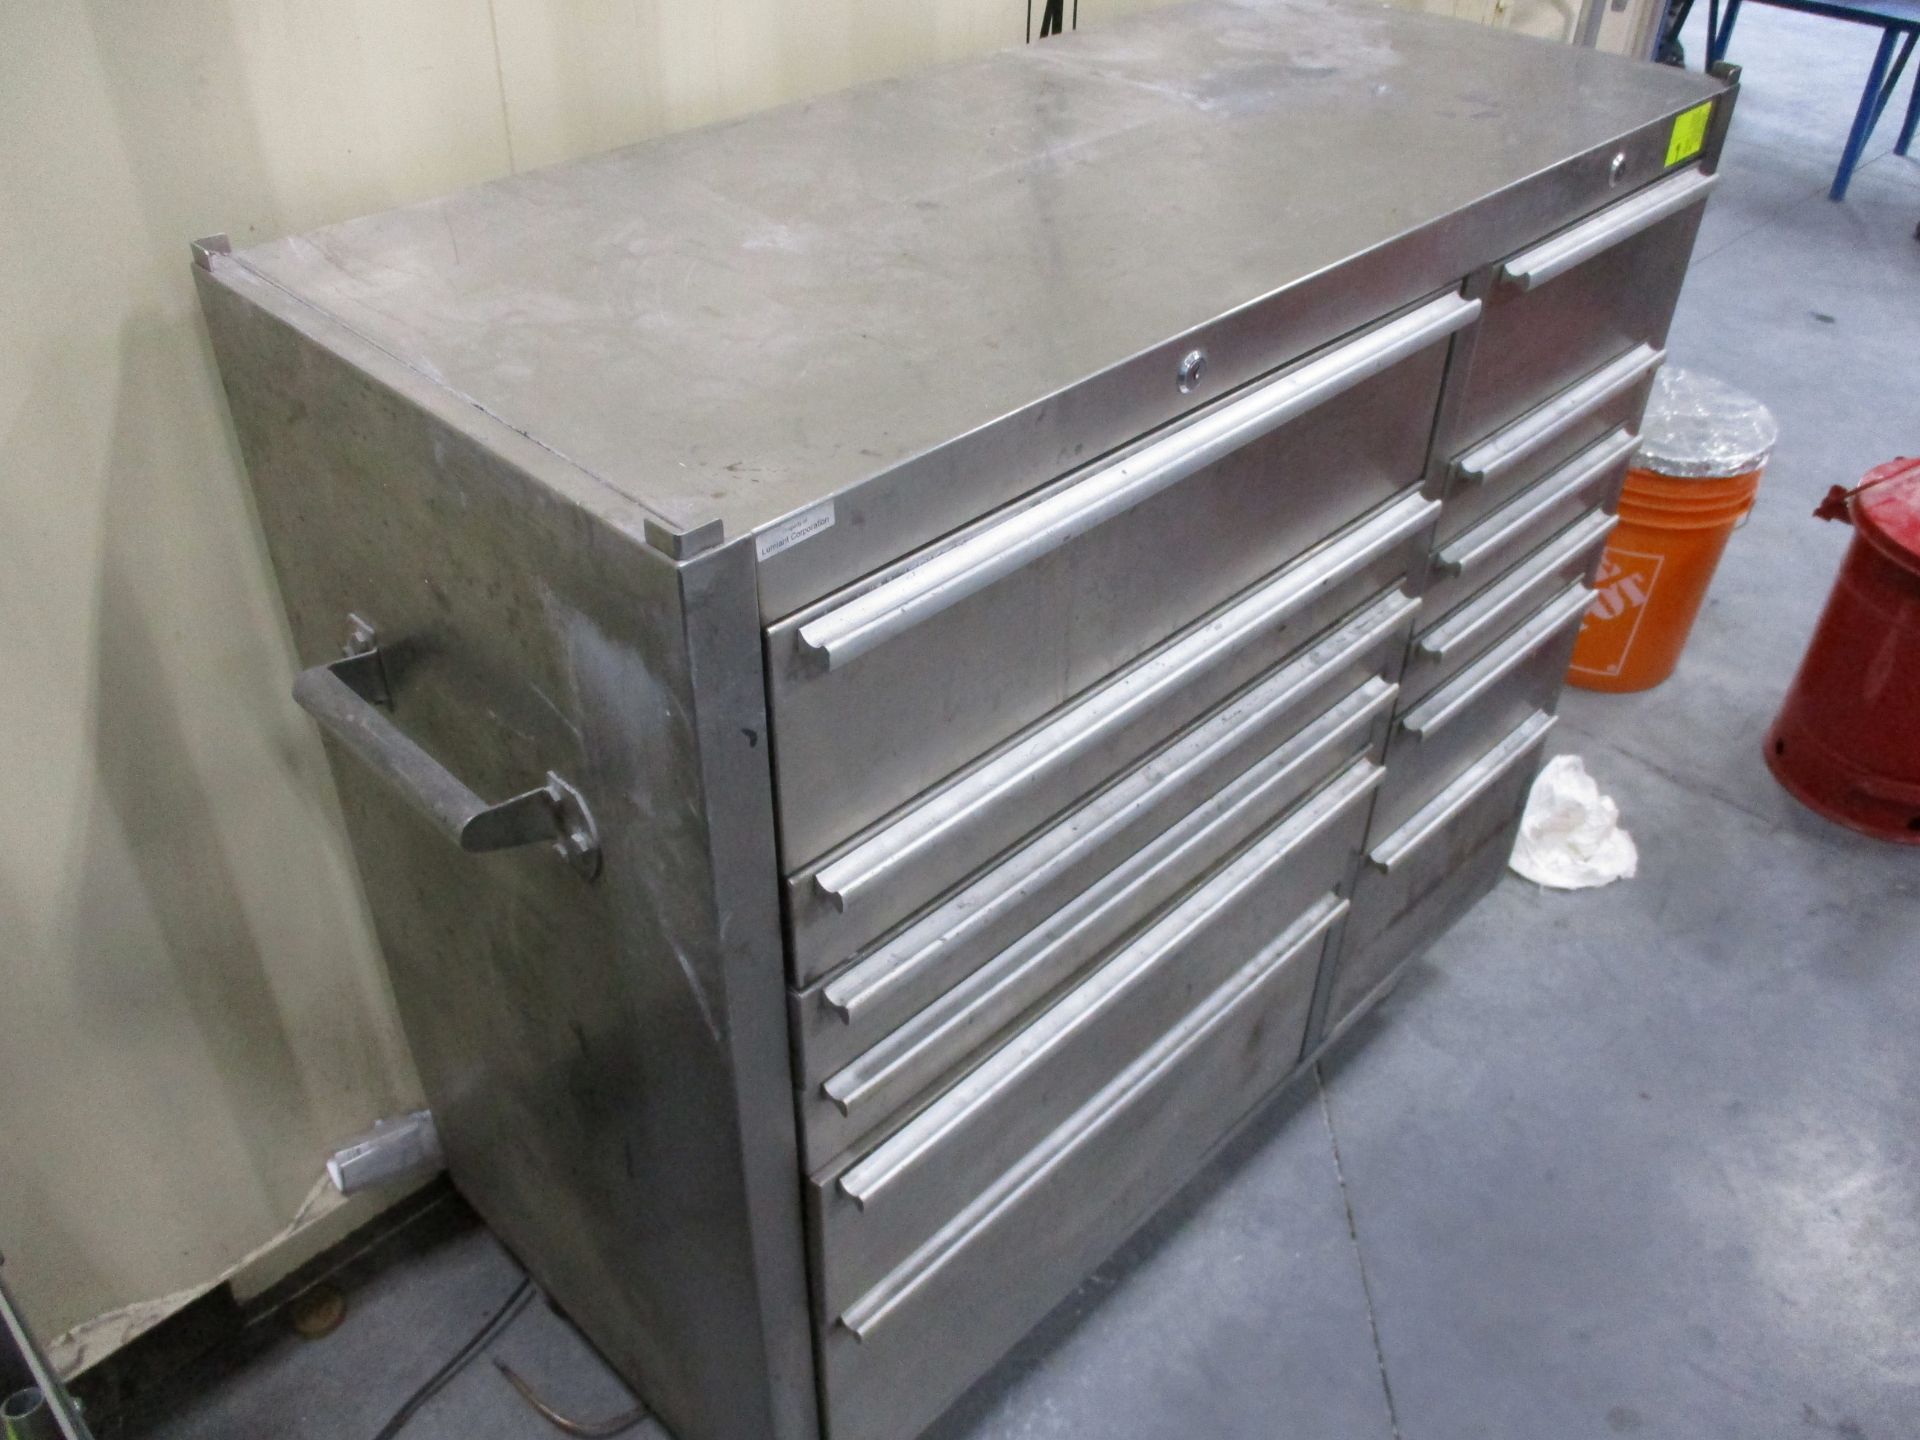 Aluminum rolling tool cabinet - Image 2 of 2